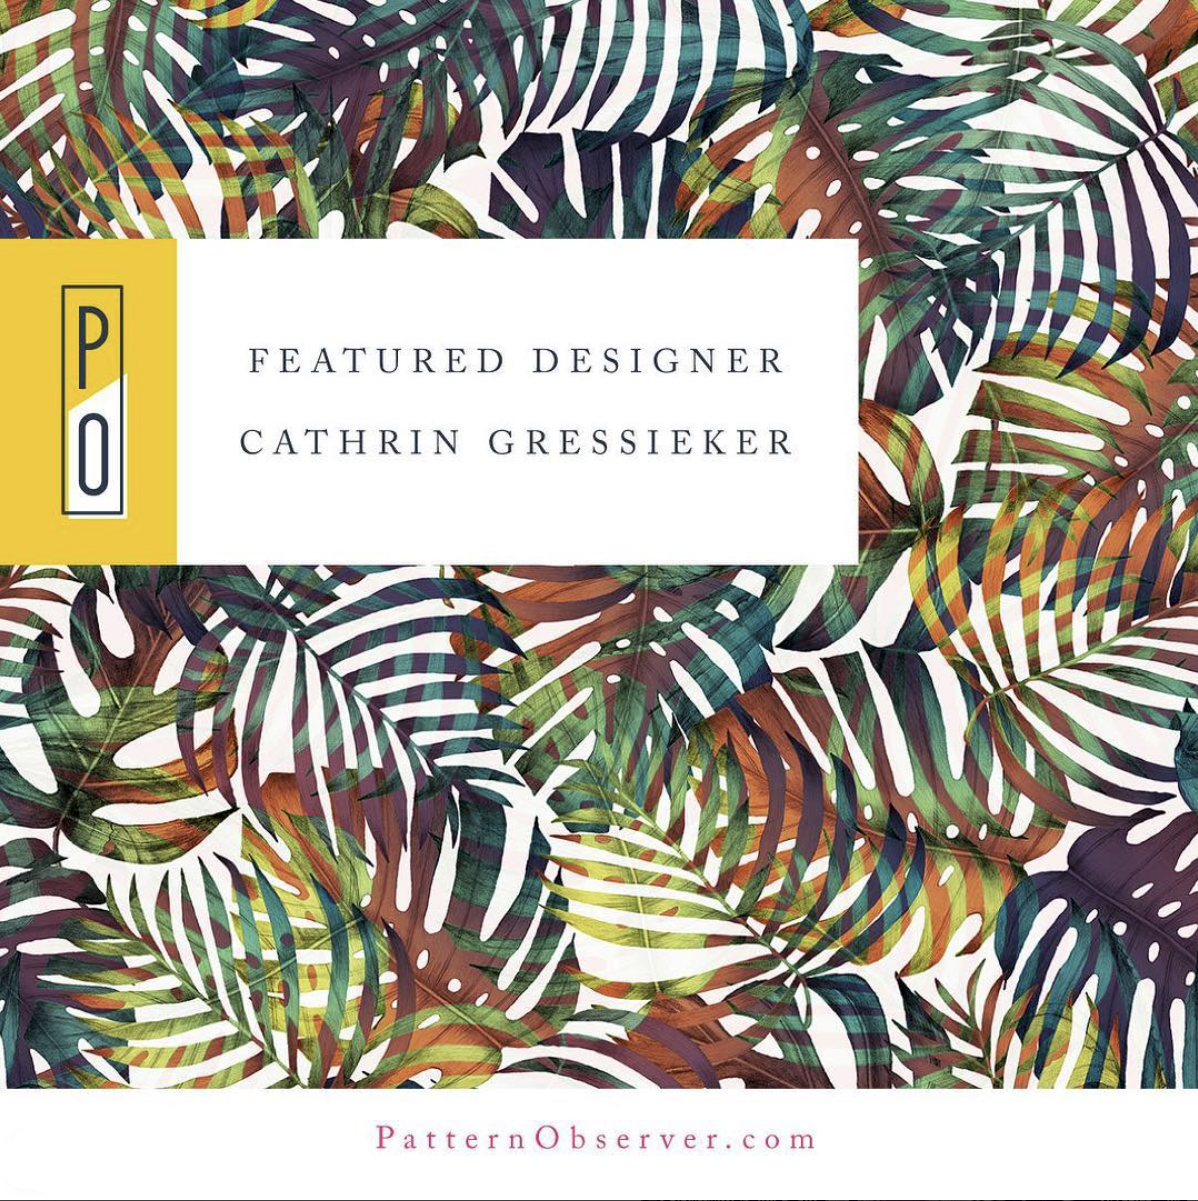 Patternobserver_Featured Designer Cathrin Gressieker